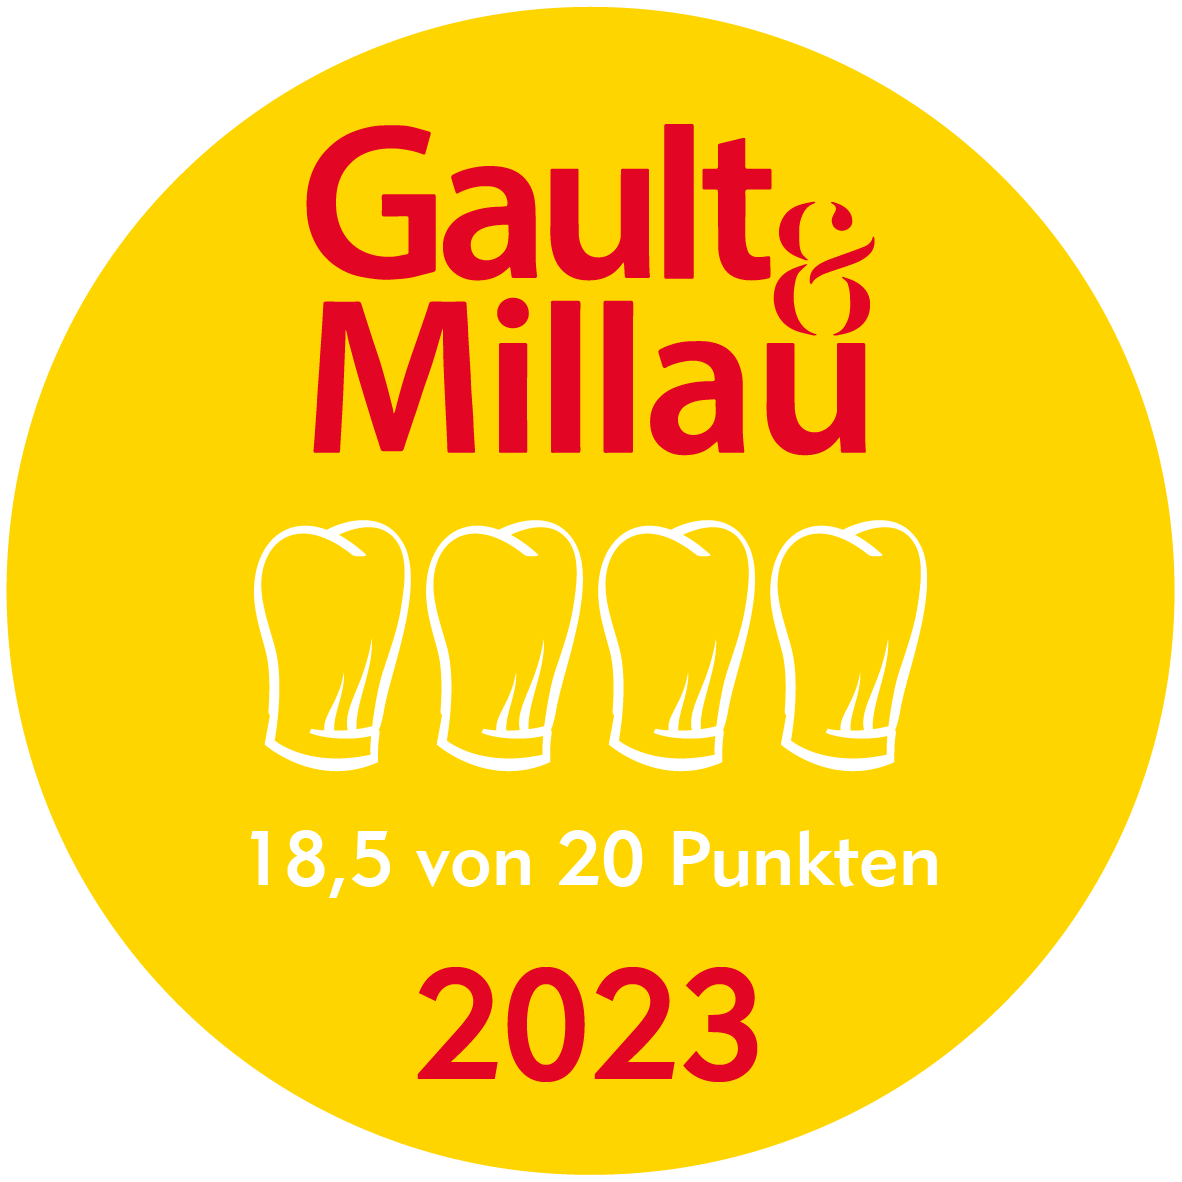 Guide Gault Millau Bewertung 2023